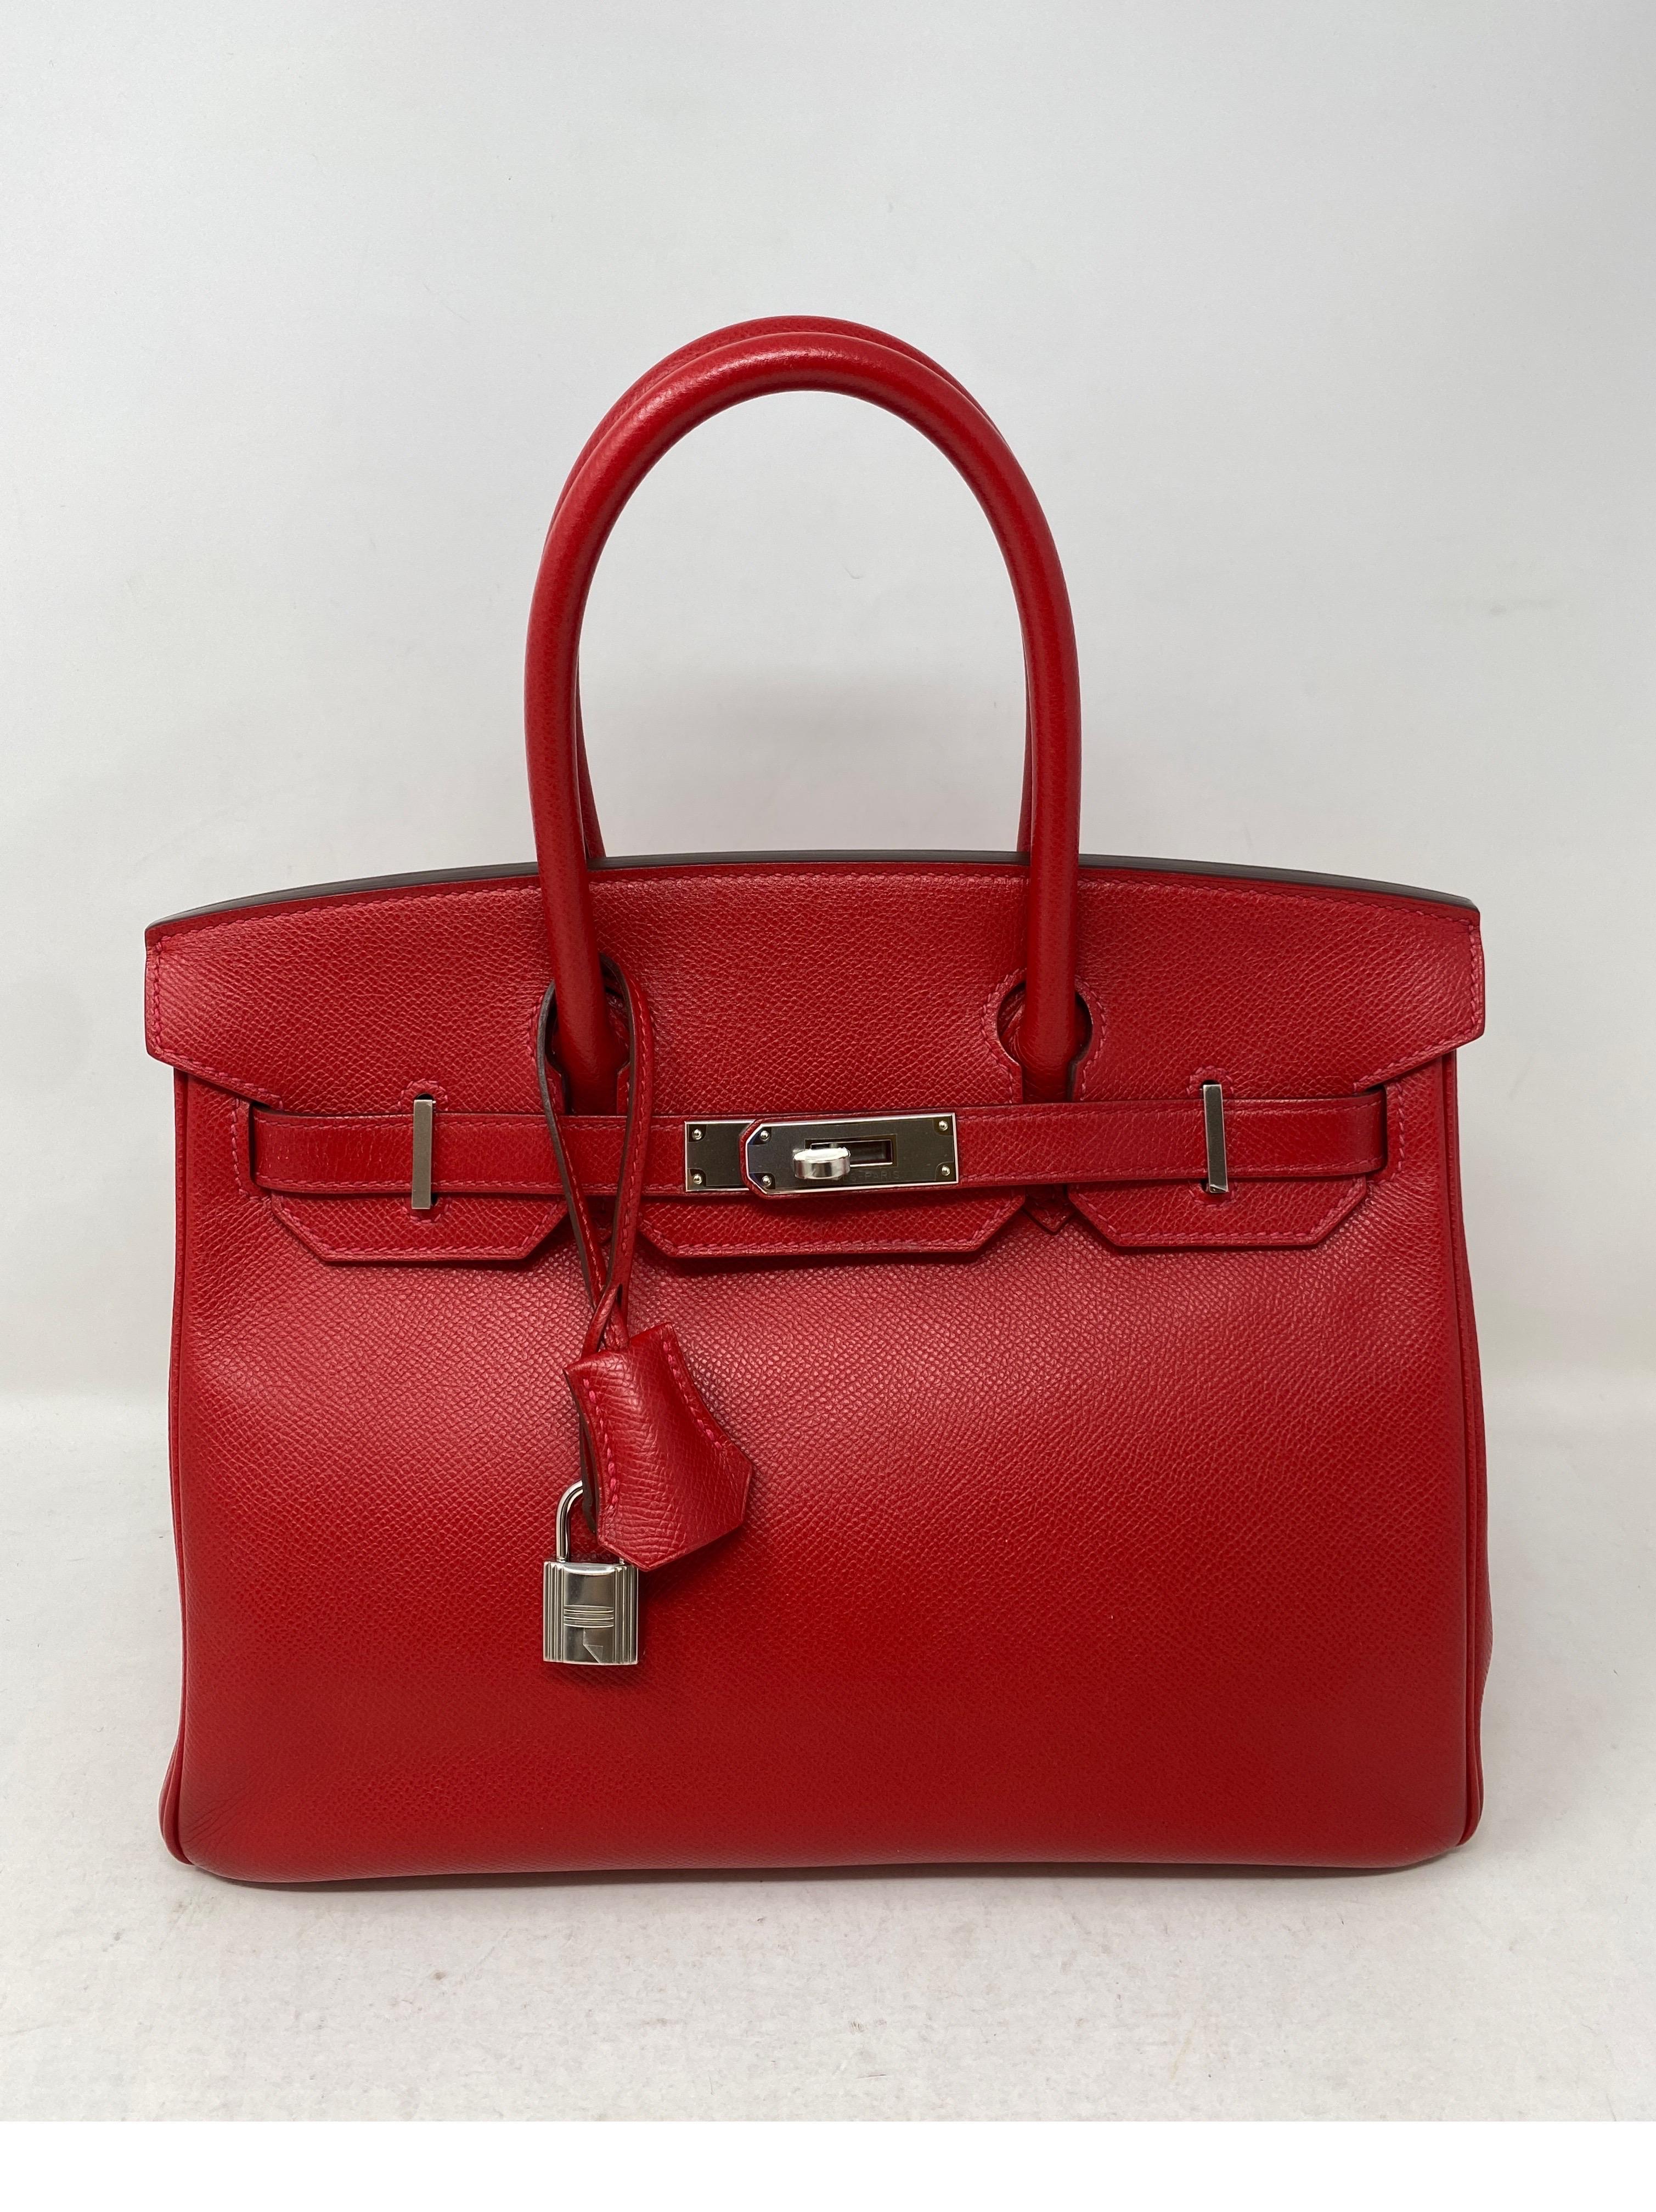 Hermes Birkin 30 Red Bag  13